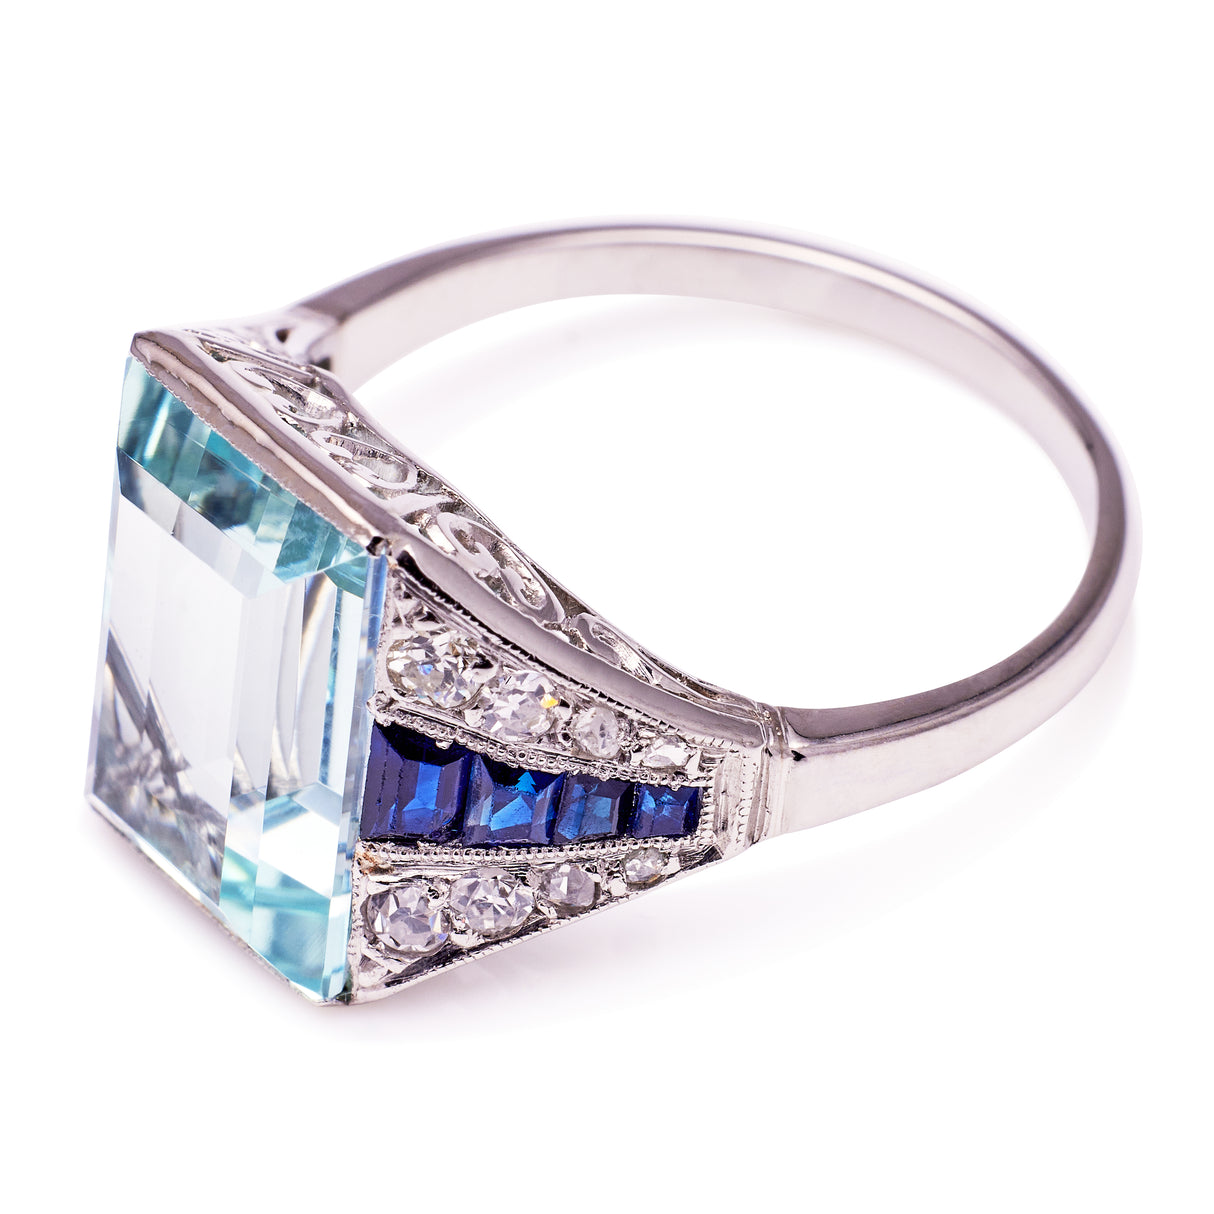 Art Deco aquamarine, sapphire and diamond ring,top view.